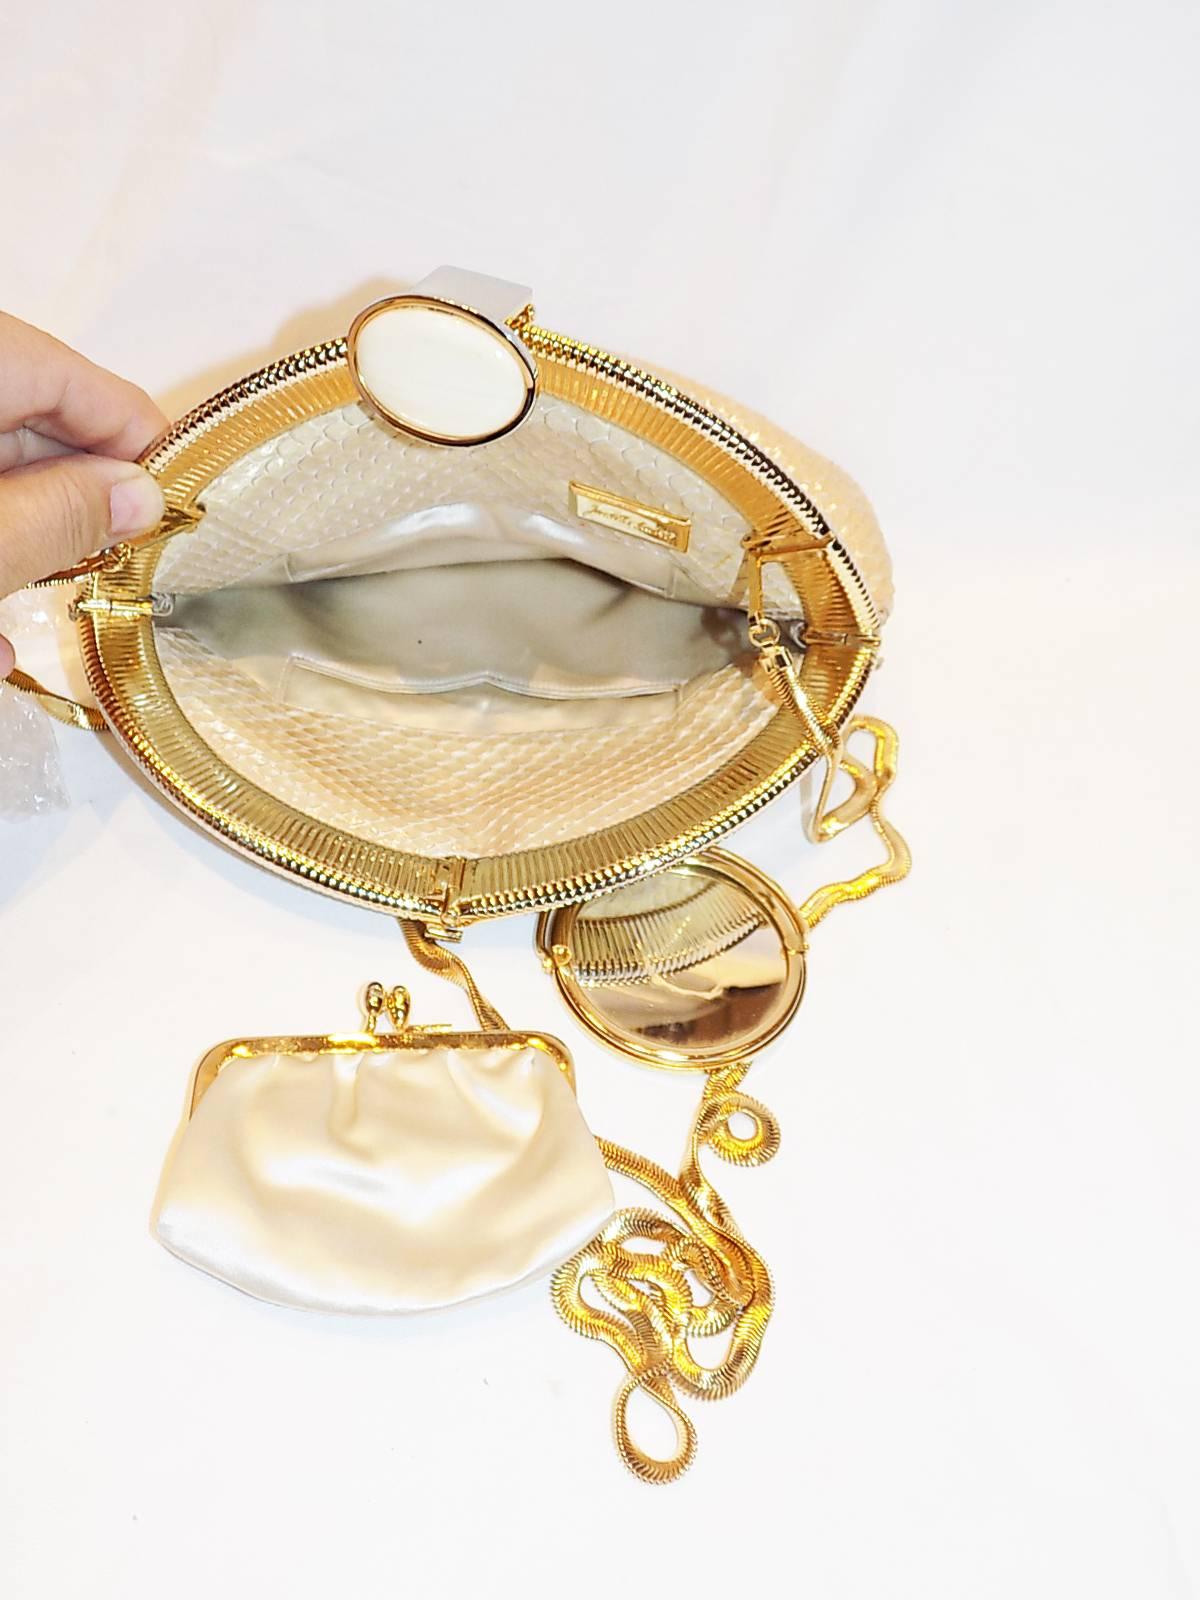 Judith Leiber Beige Snake Skin Frame Handbag Clutch with large oval  Stone Clasp For Sale 3